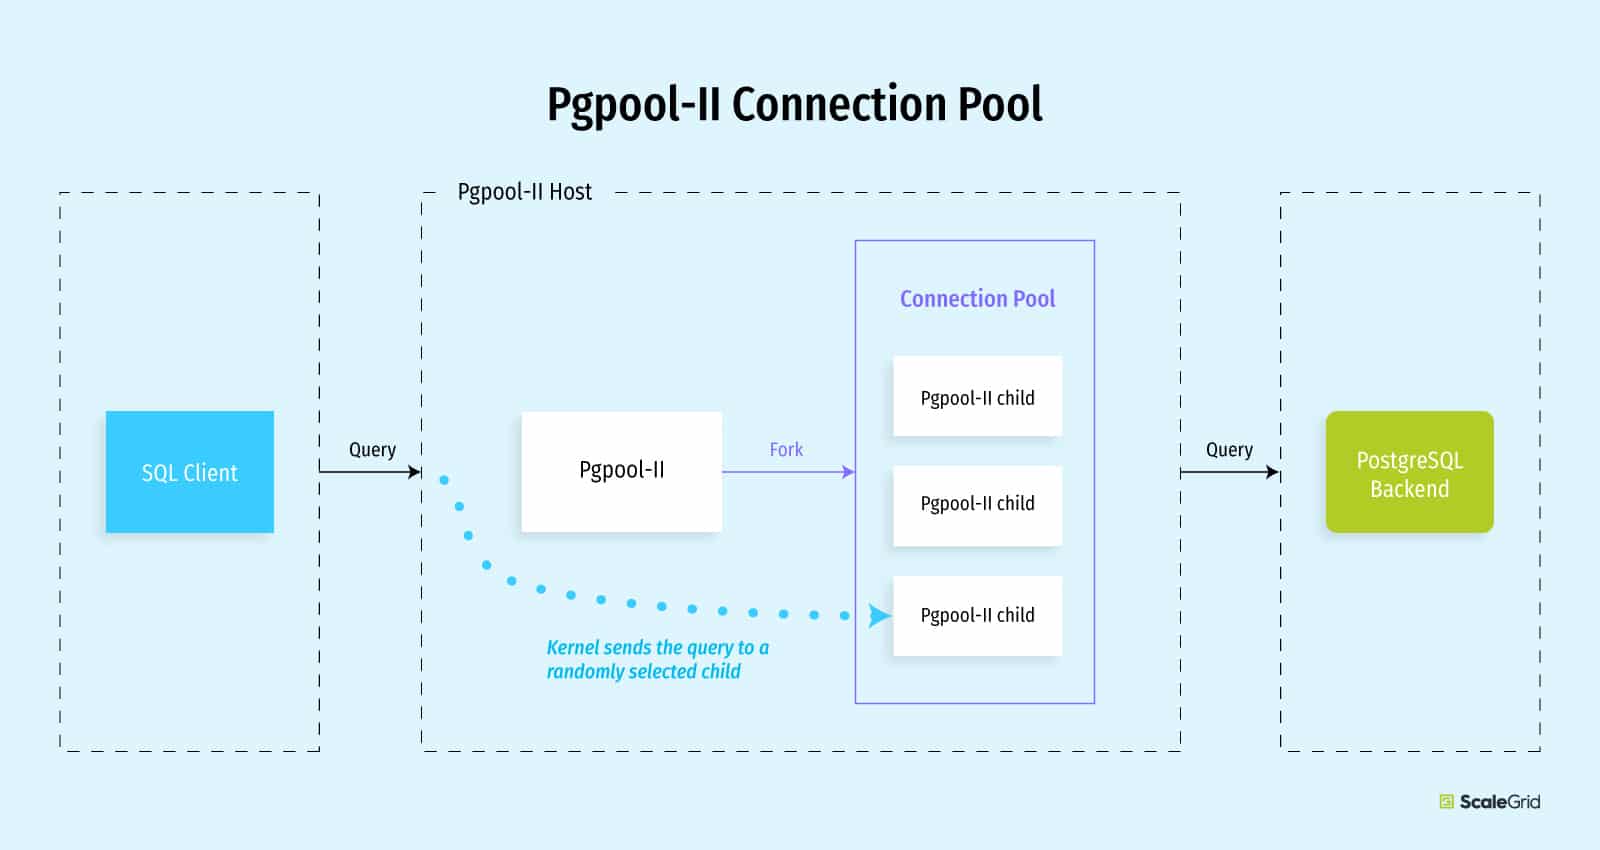 Pgpool-II Connection Pool Diagram - ScaleGrid Blog